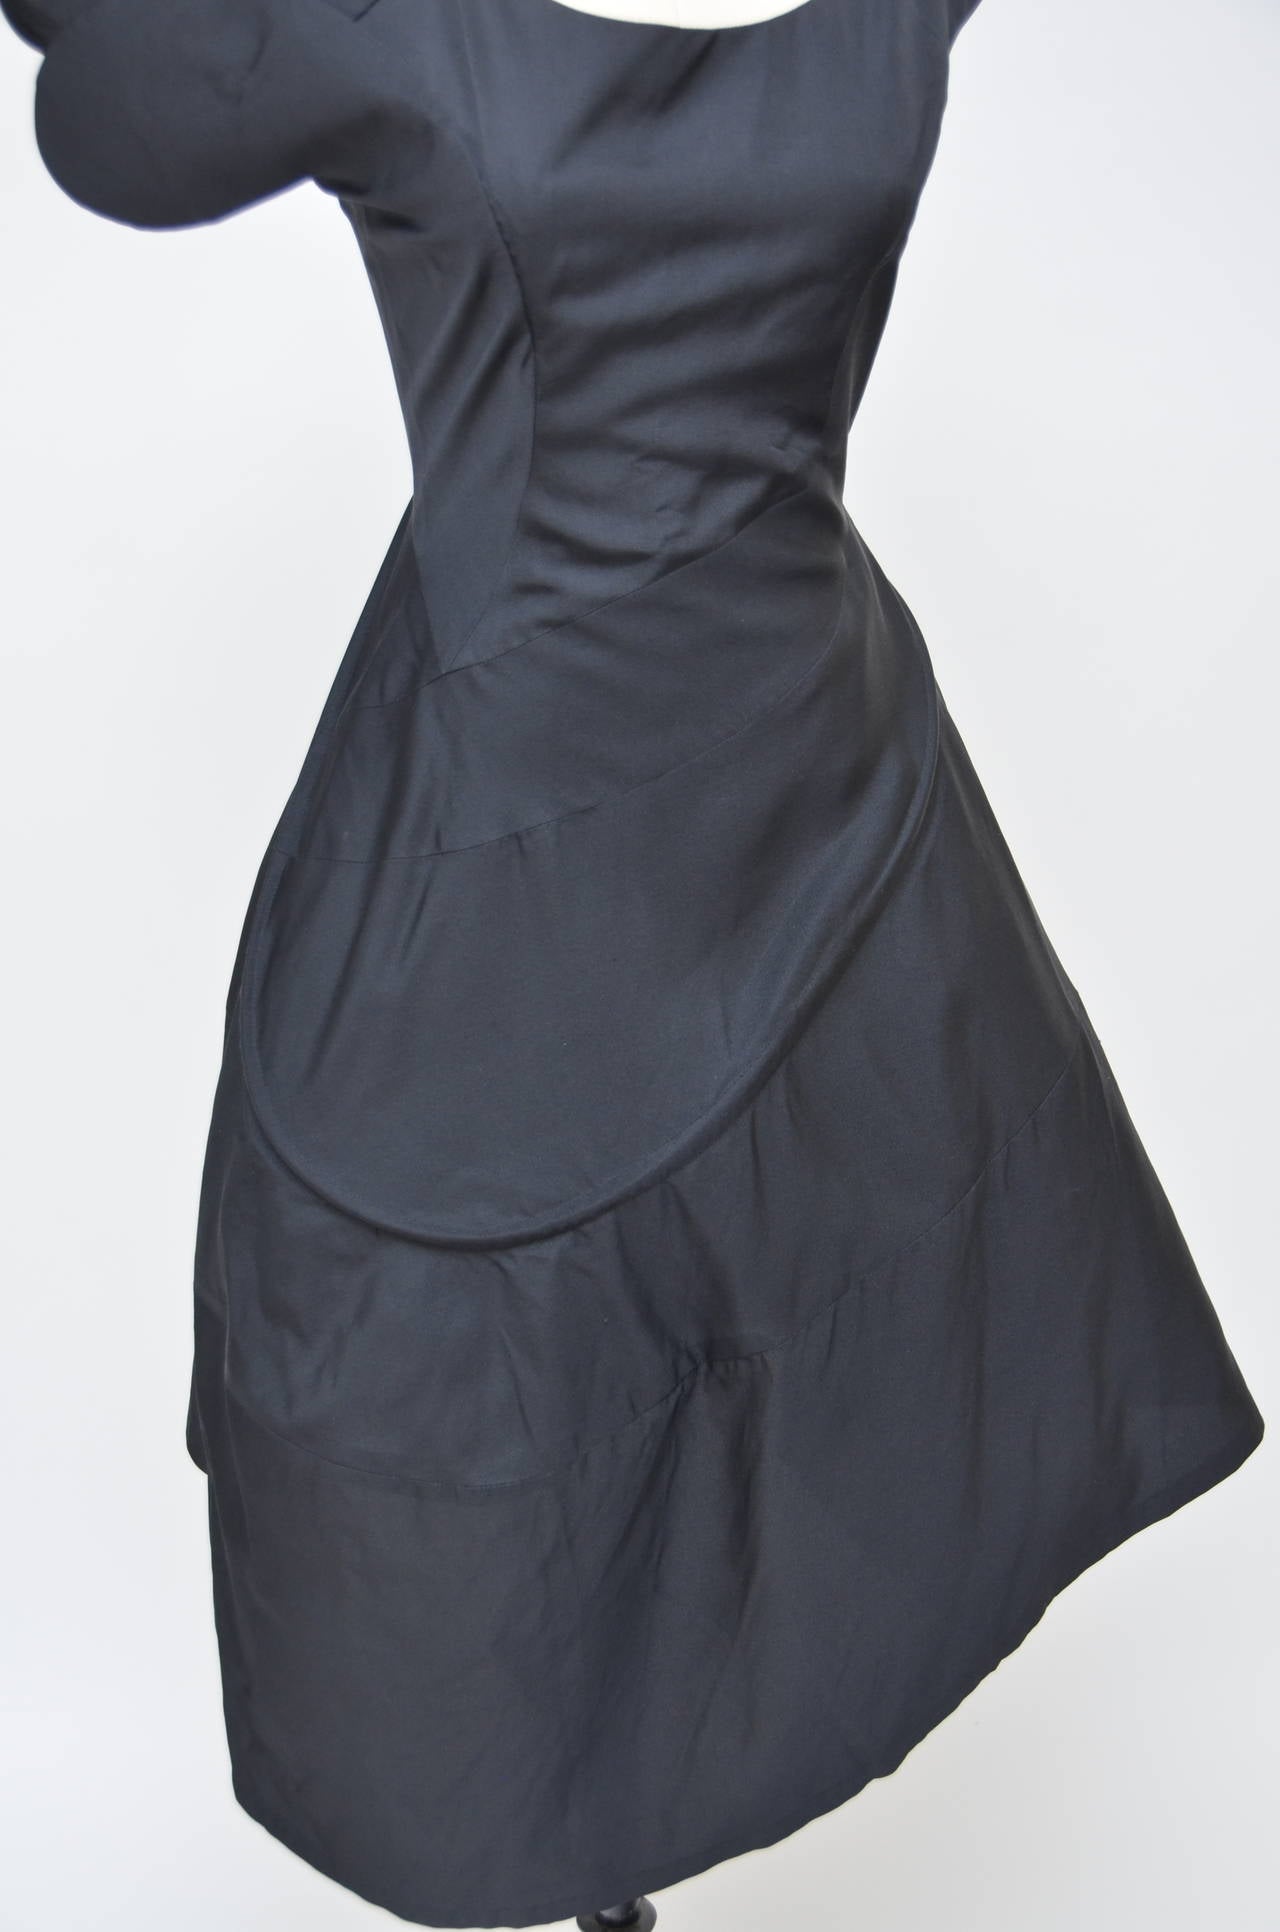 YOHJI YAMAMOTO  black  silk  swirl dress.

Red (similar) version of this dress was part of the 2011 exhibition 